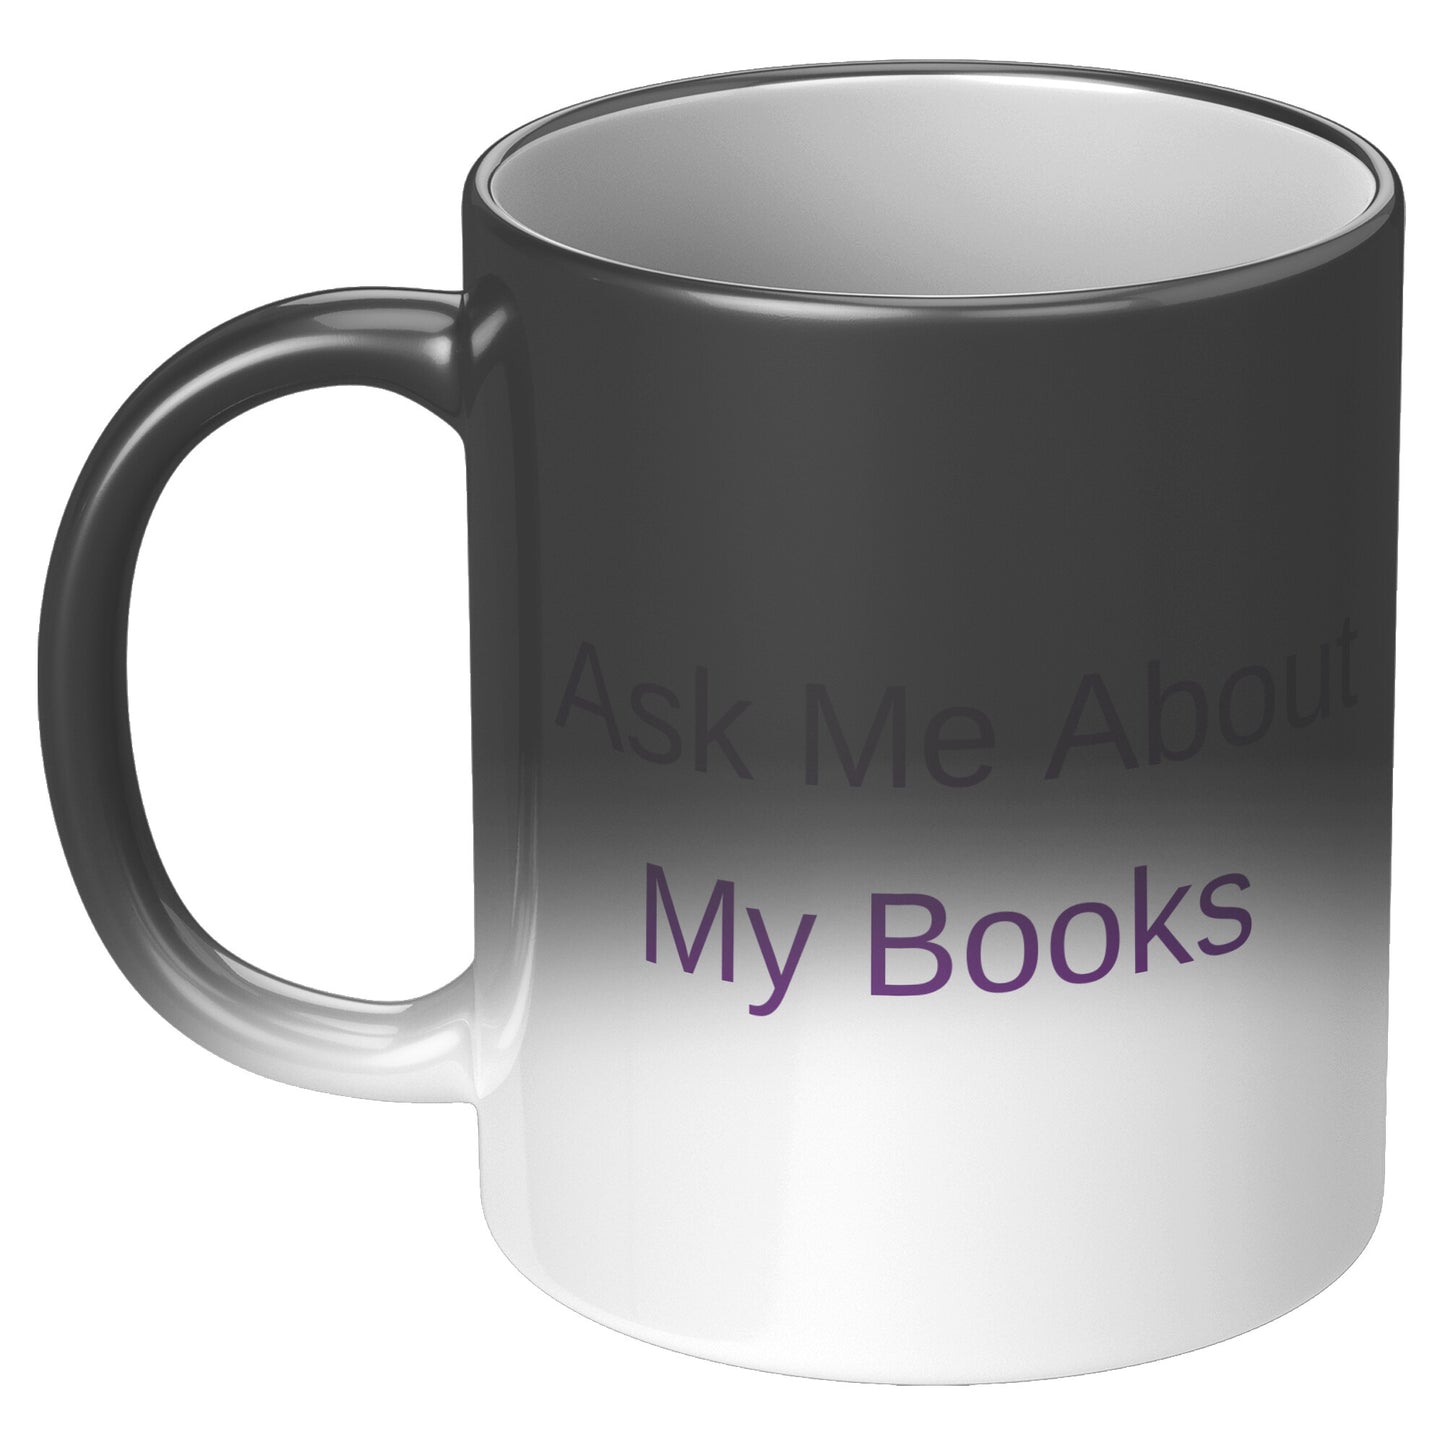 Ask Me About my books Magic Mug